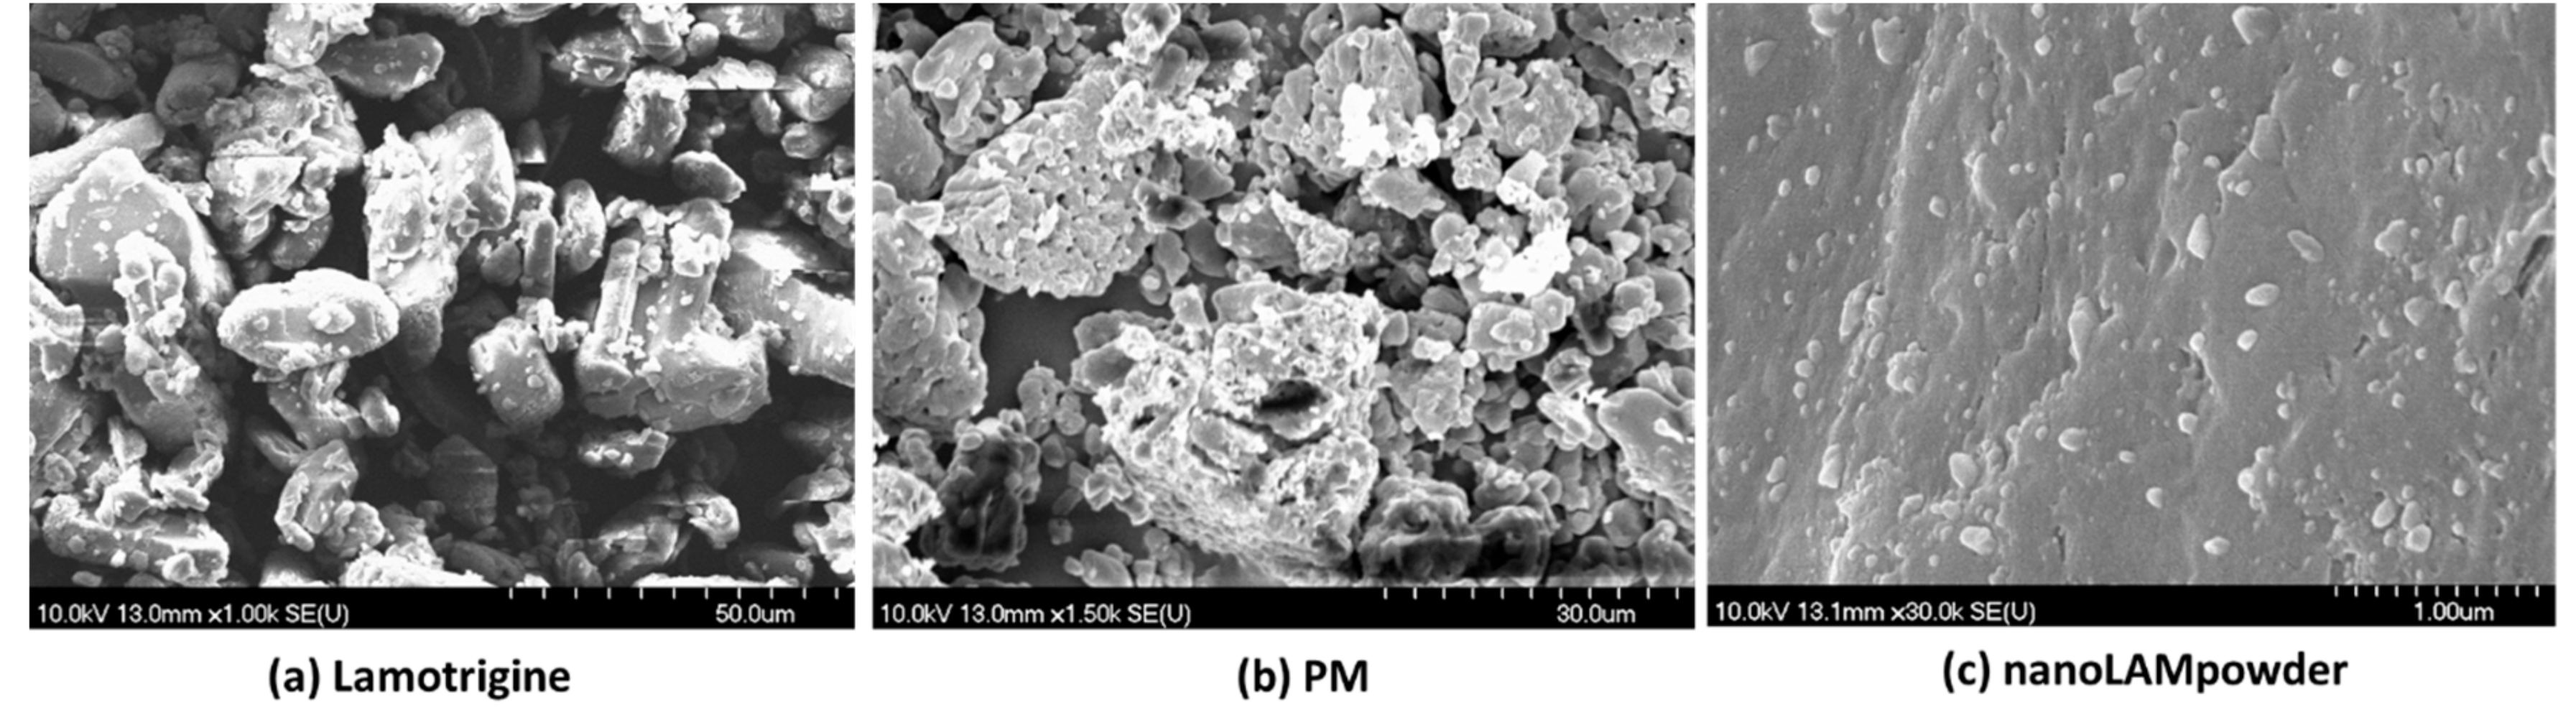 Molecules | Free Full-Text | Investigation of the Absorption of Nanosized  lamotrigine Containing Nasal Powder via the Nasal Cavity | HTML